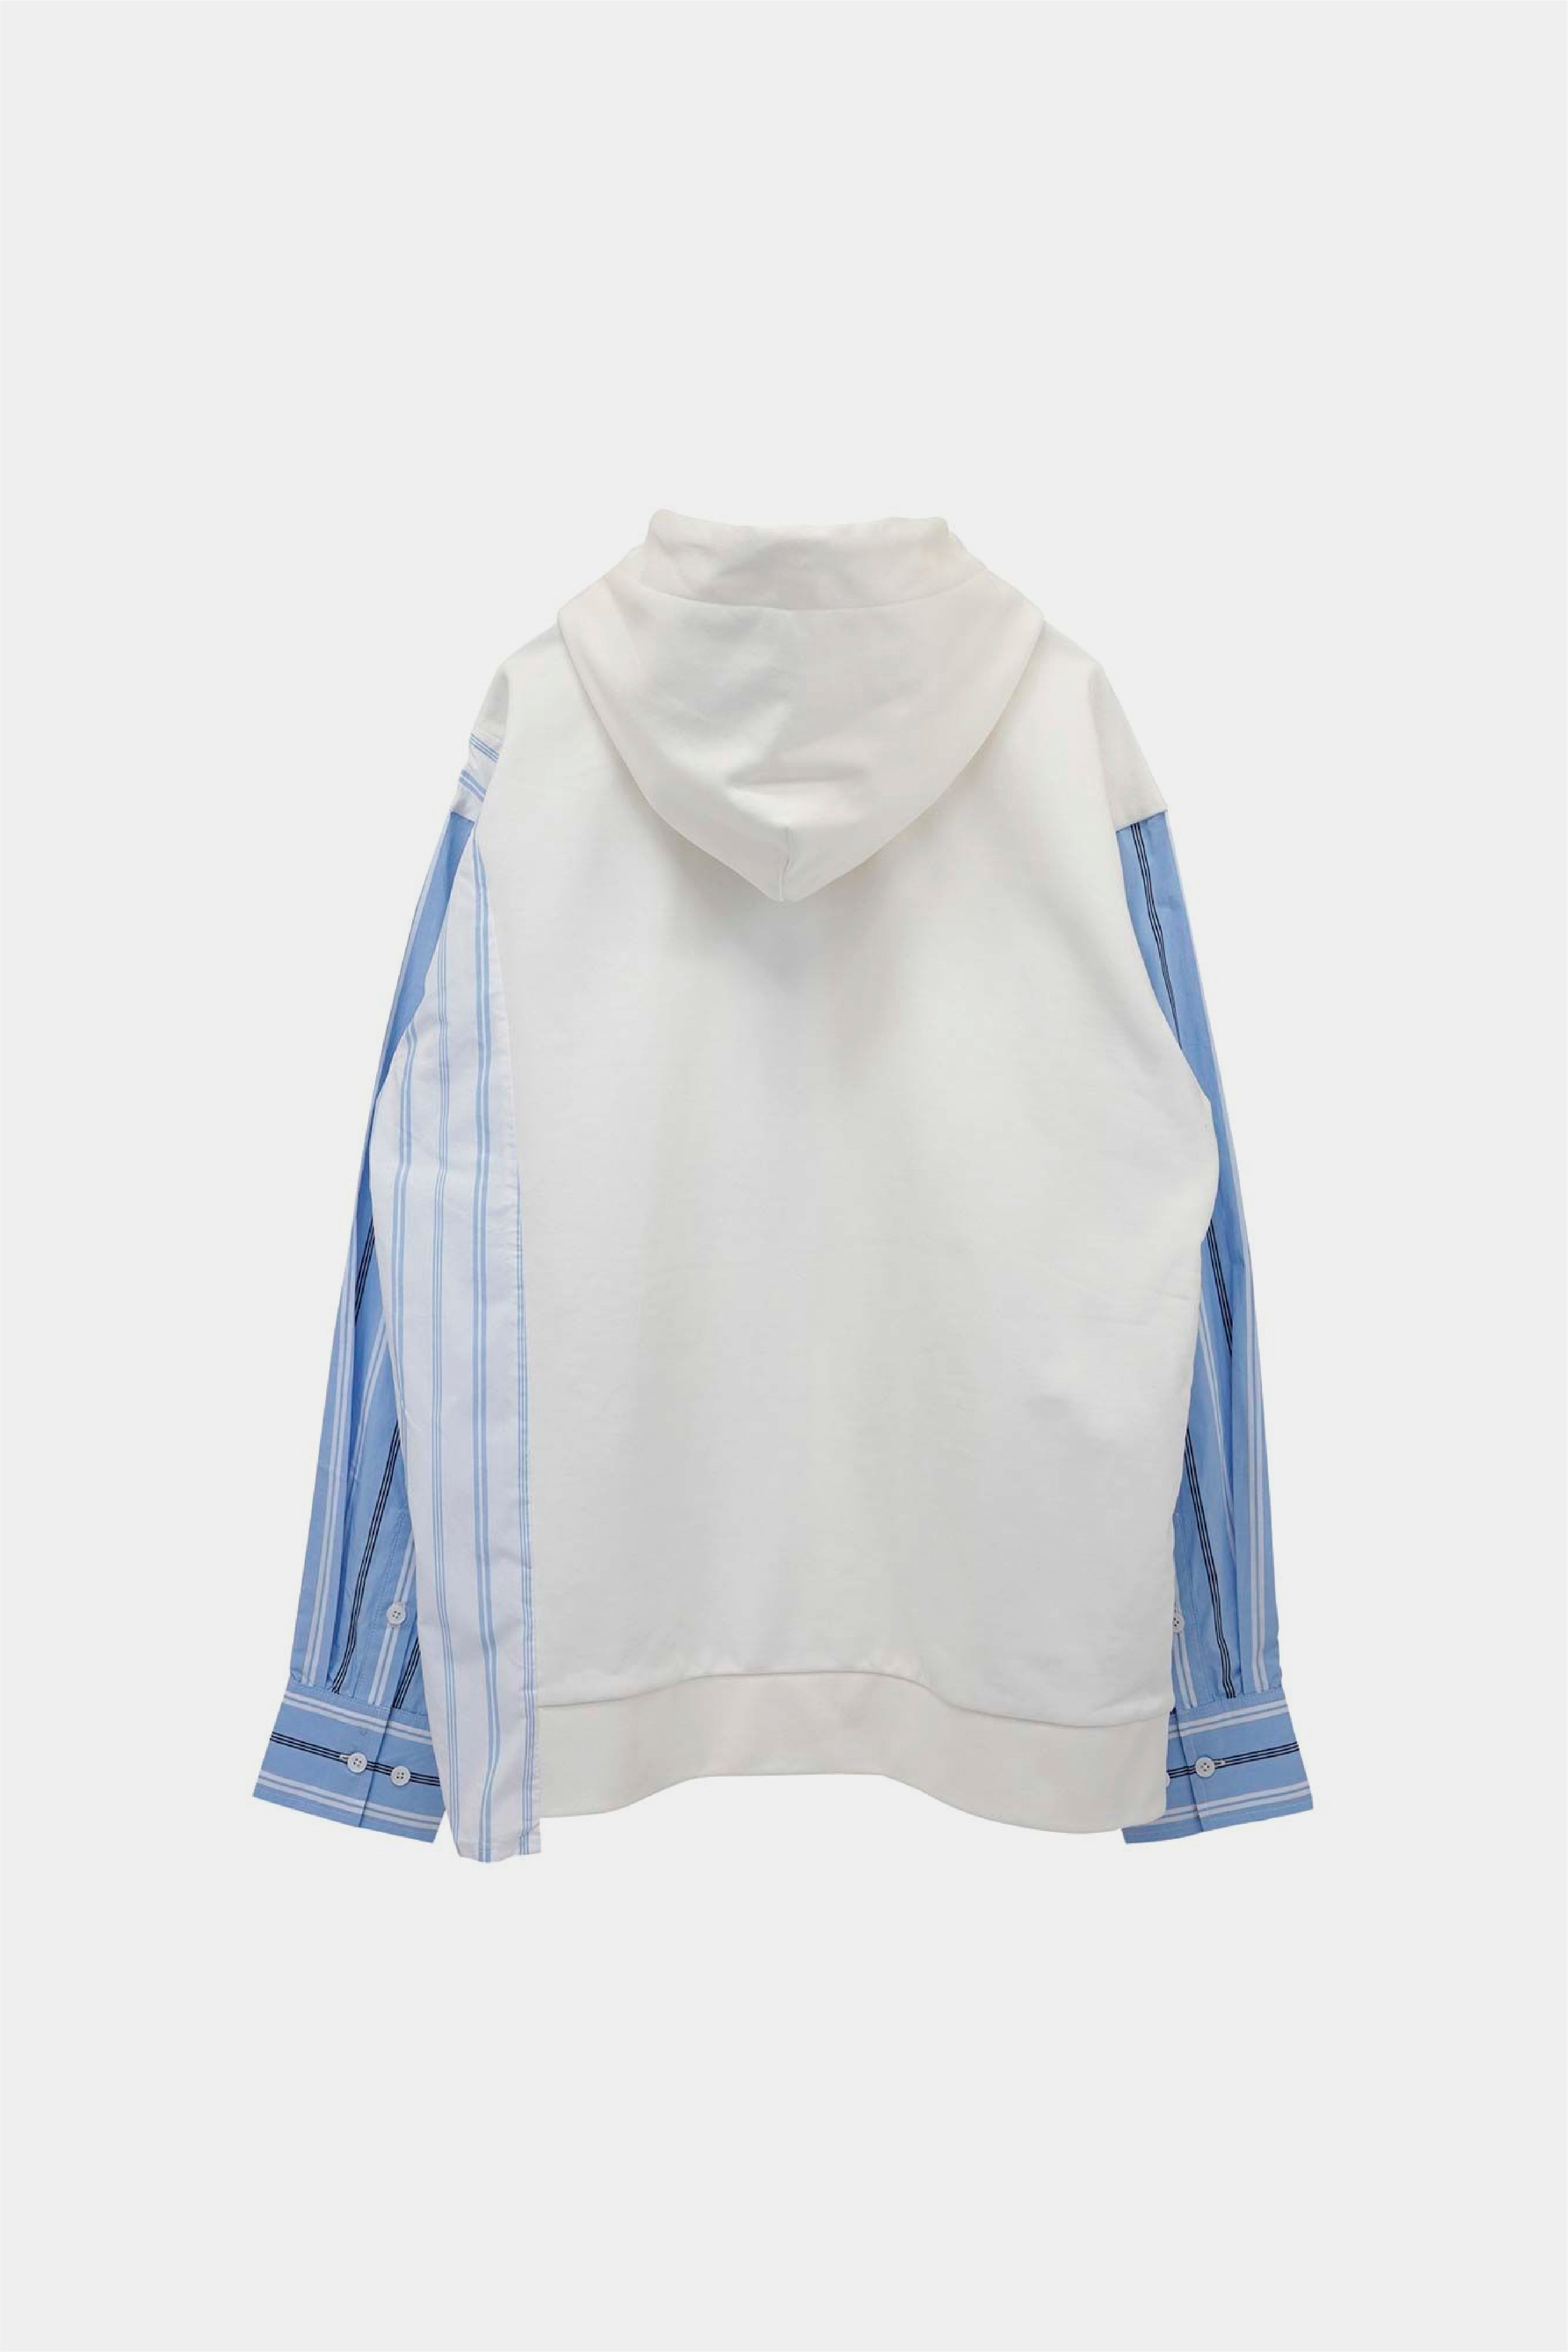 Selectshop FRAME - FENG CHEN WANG Jersey Shirting Panelled Hoodie Sweats-knits Dubai